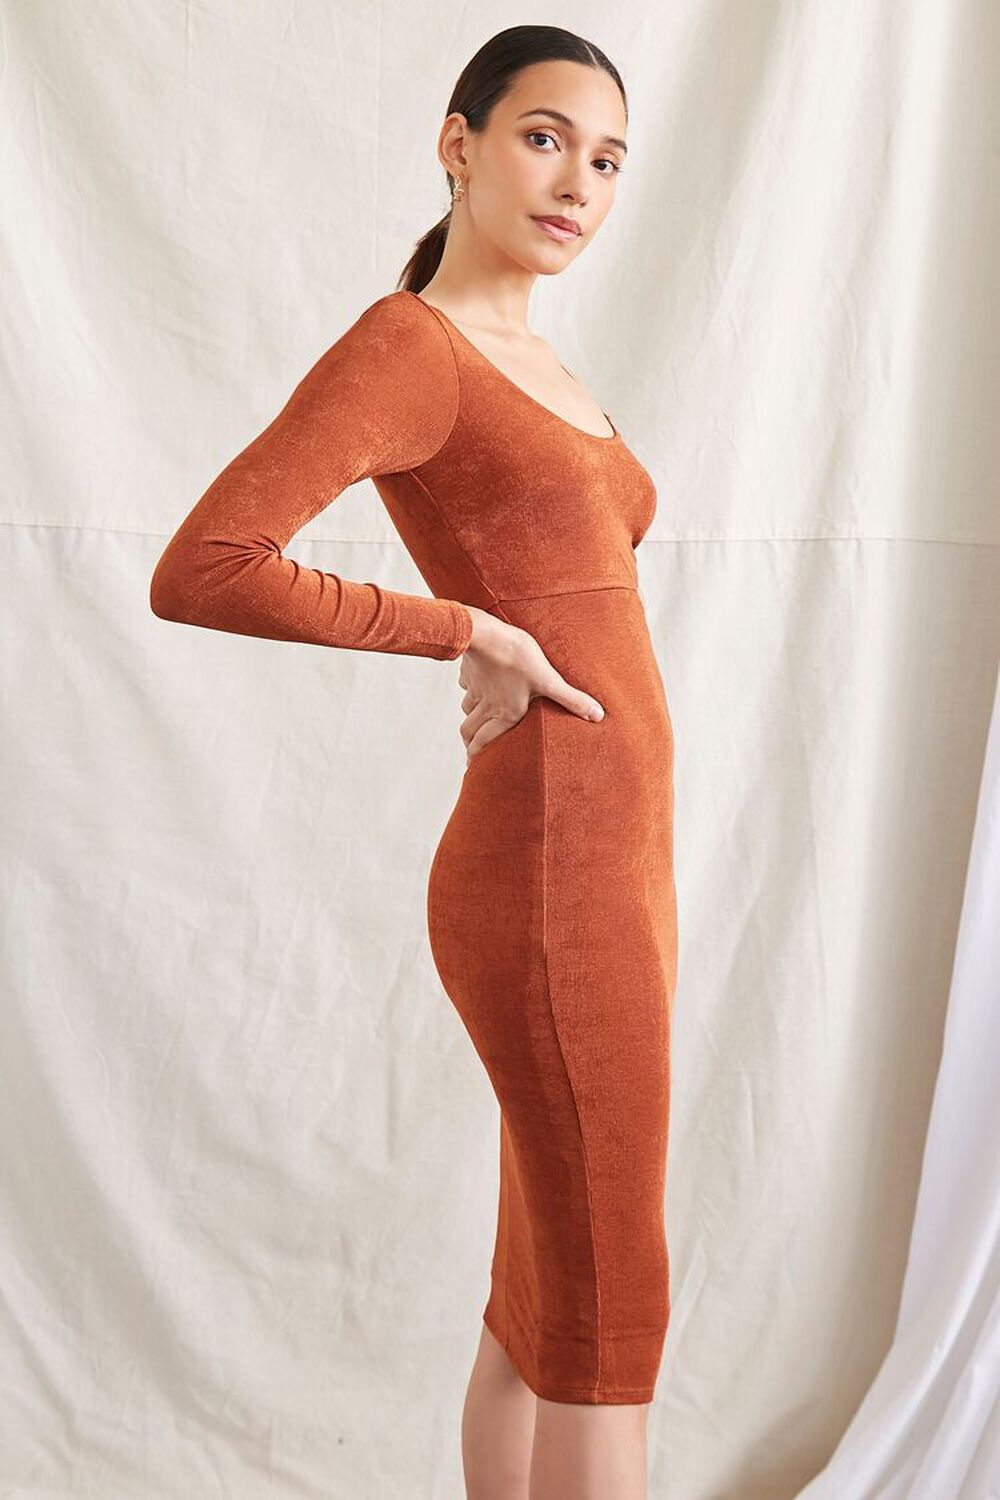 BROWN One-Sleeve Cutout Mini Dress, image 2